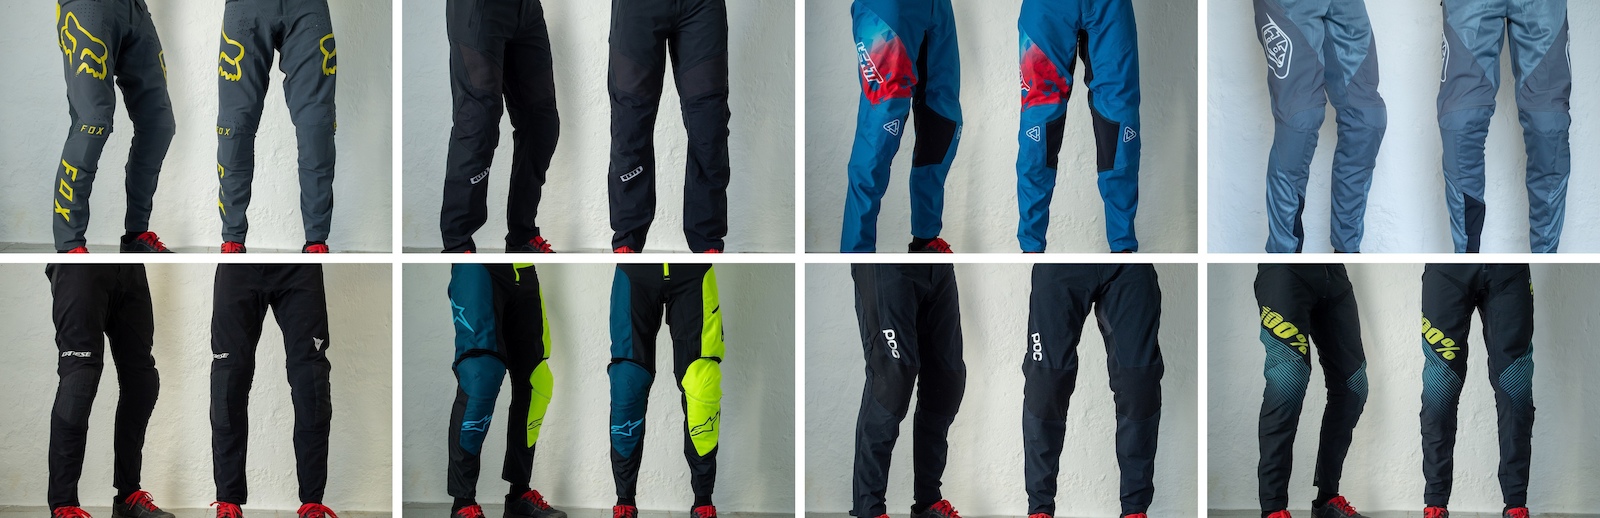 Men's Breathable Warm Pants - SH 500 Grey - Carbon grey, Black - Quechua -  Decathlon